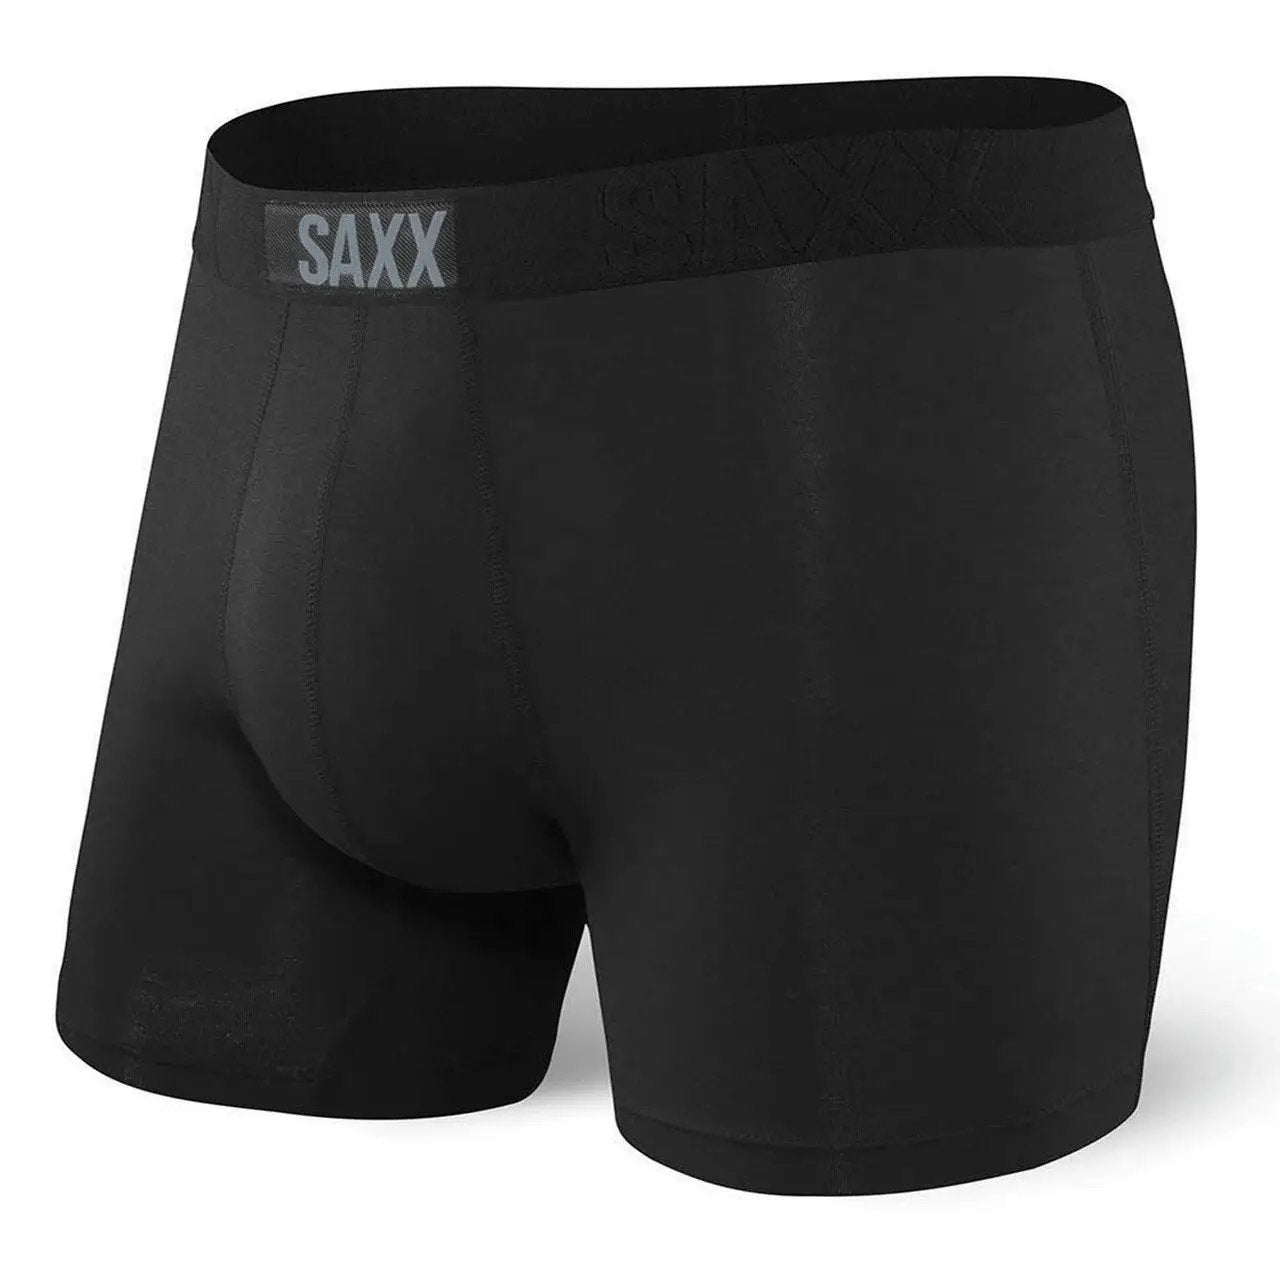 Saxx VIBE Boxer Black Brief - John Bull Clothing